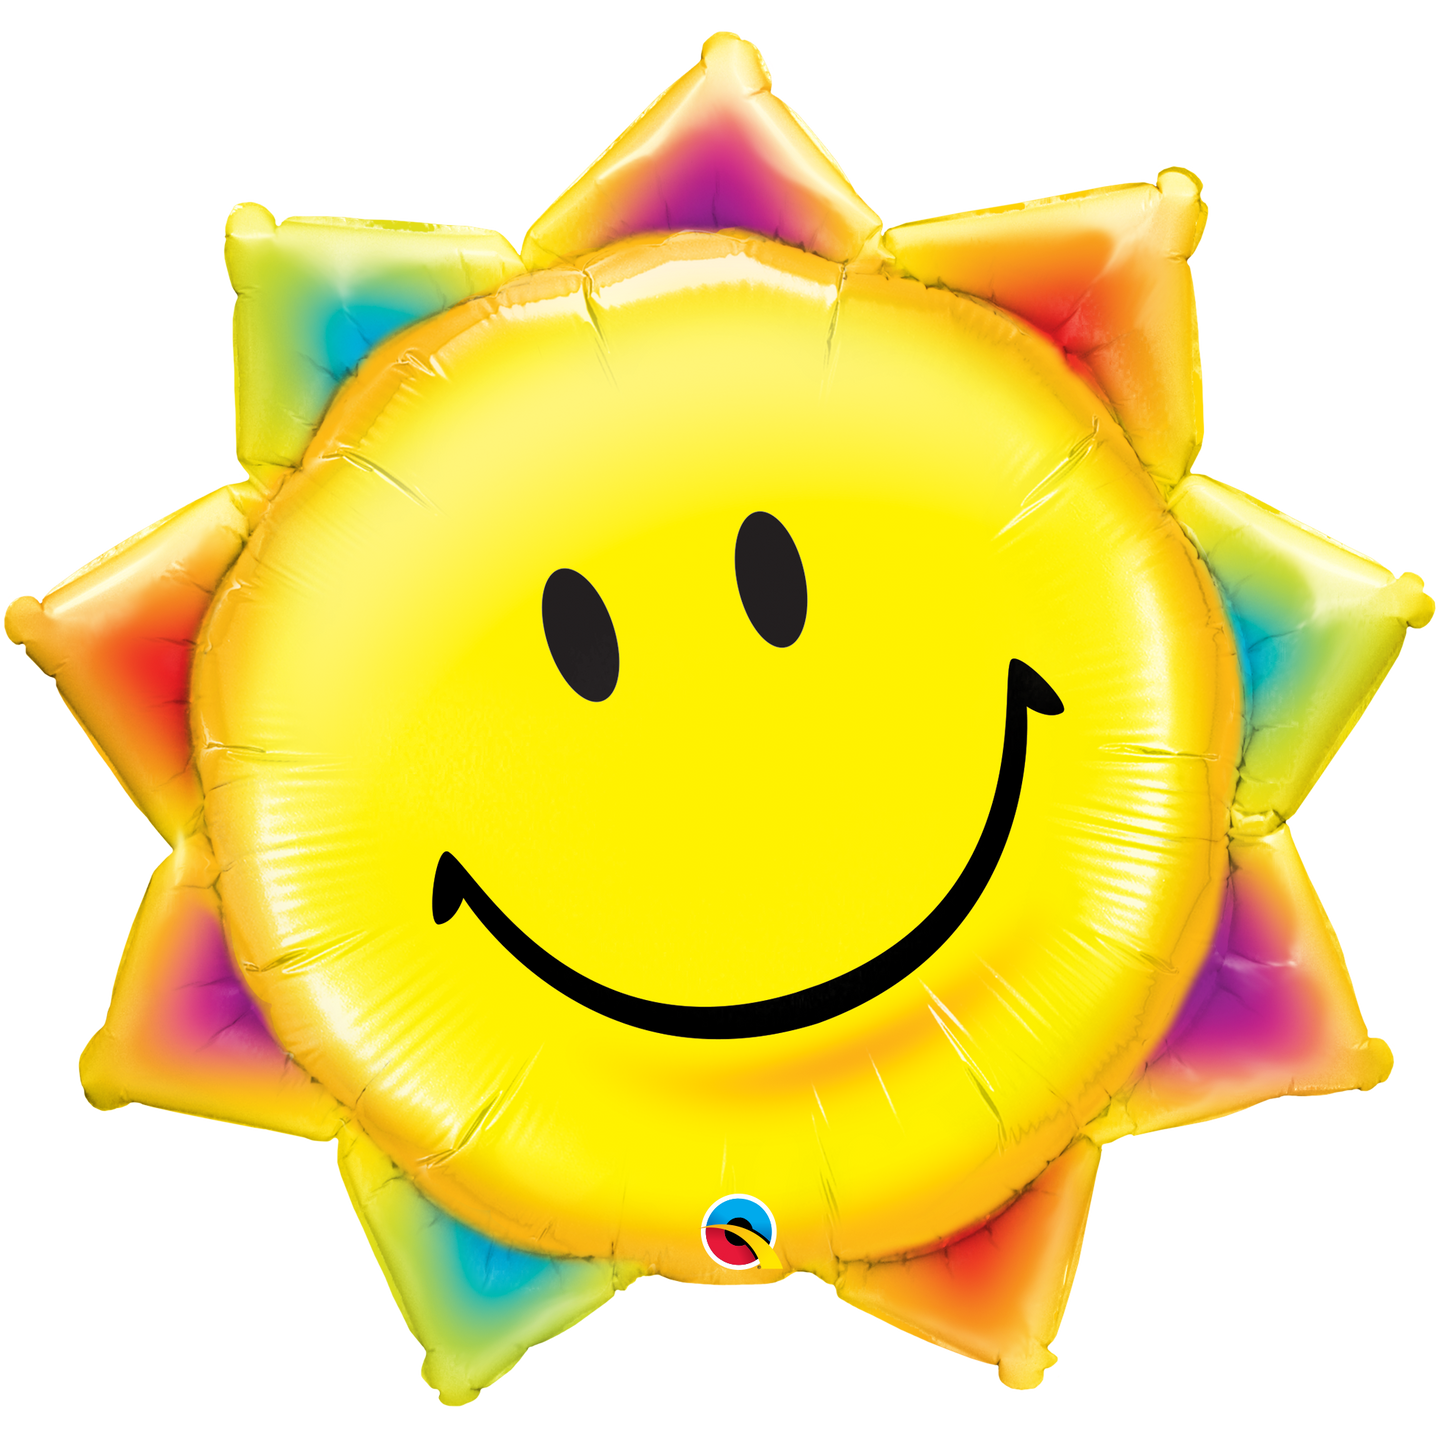 Sunshine Smile Face Balloon